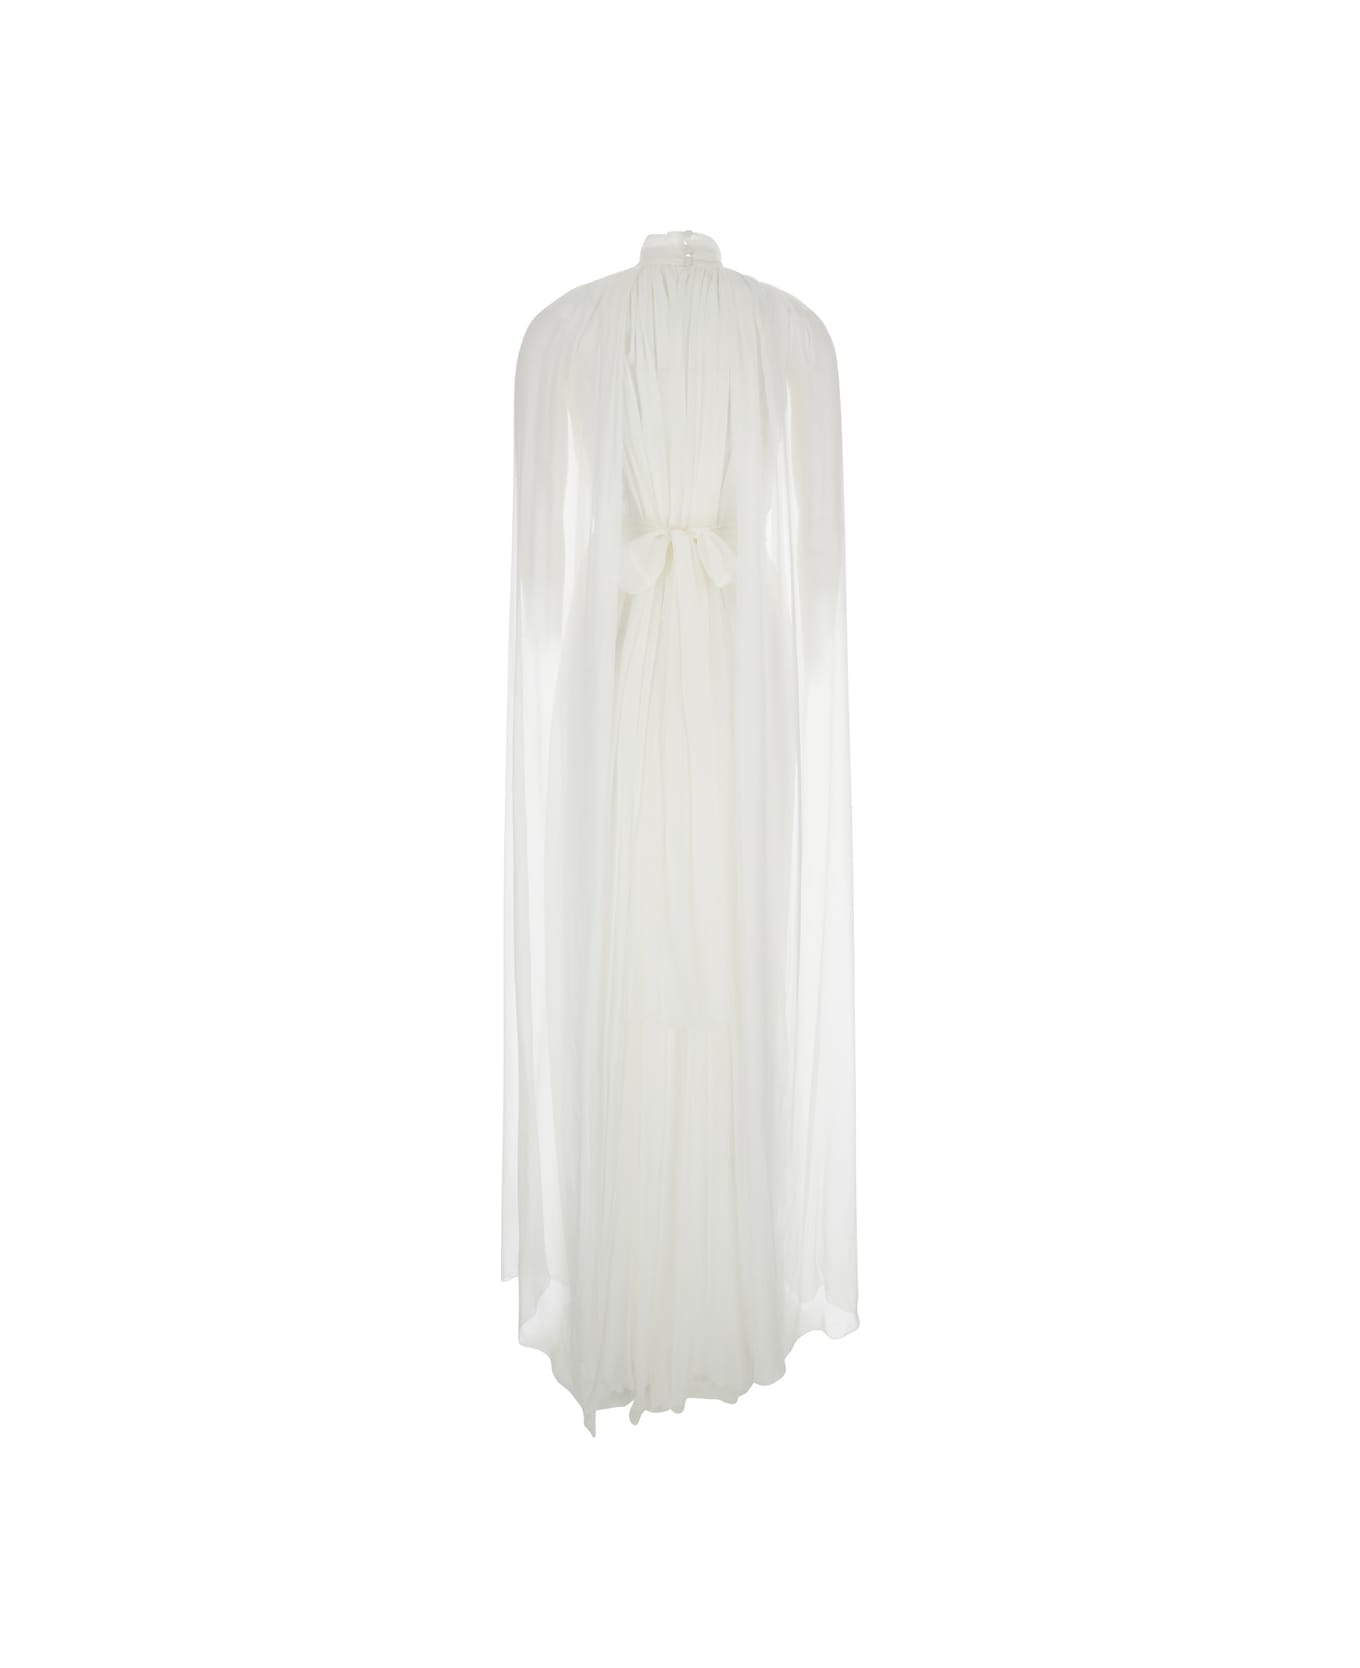 Alberta Ferretti Long White Pleated Dress With Criss-cross Detail In Silk Chiffon Woman - White